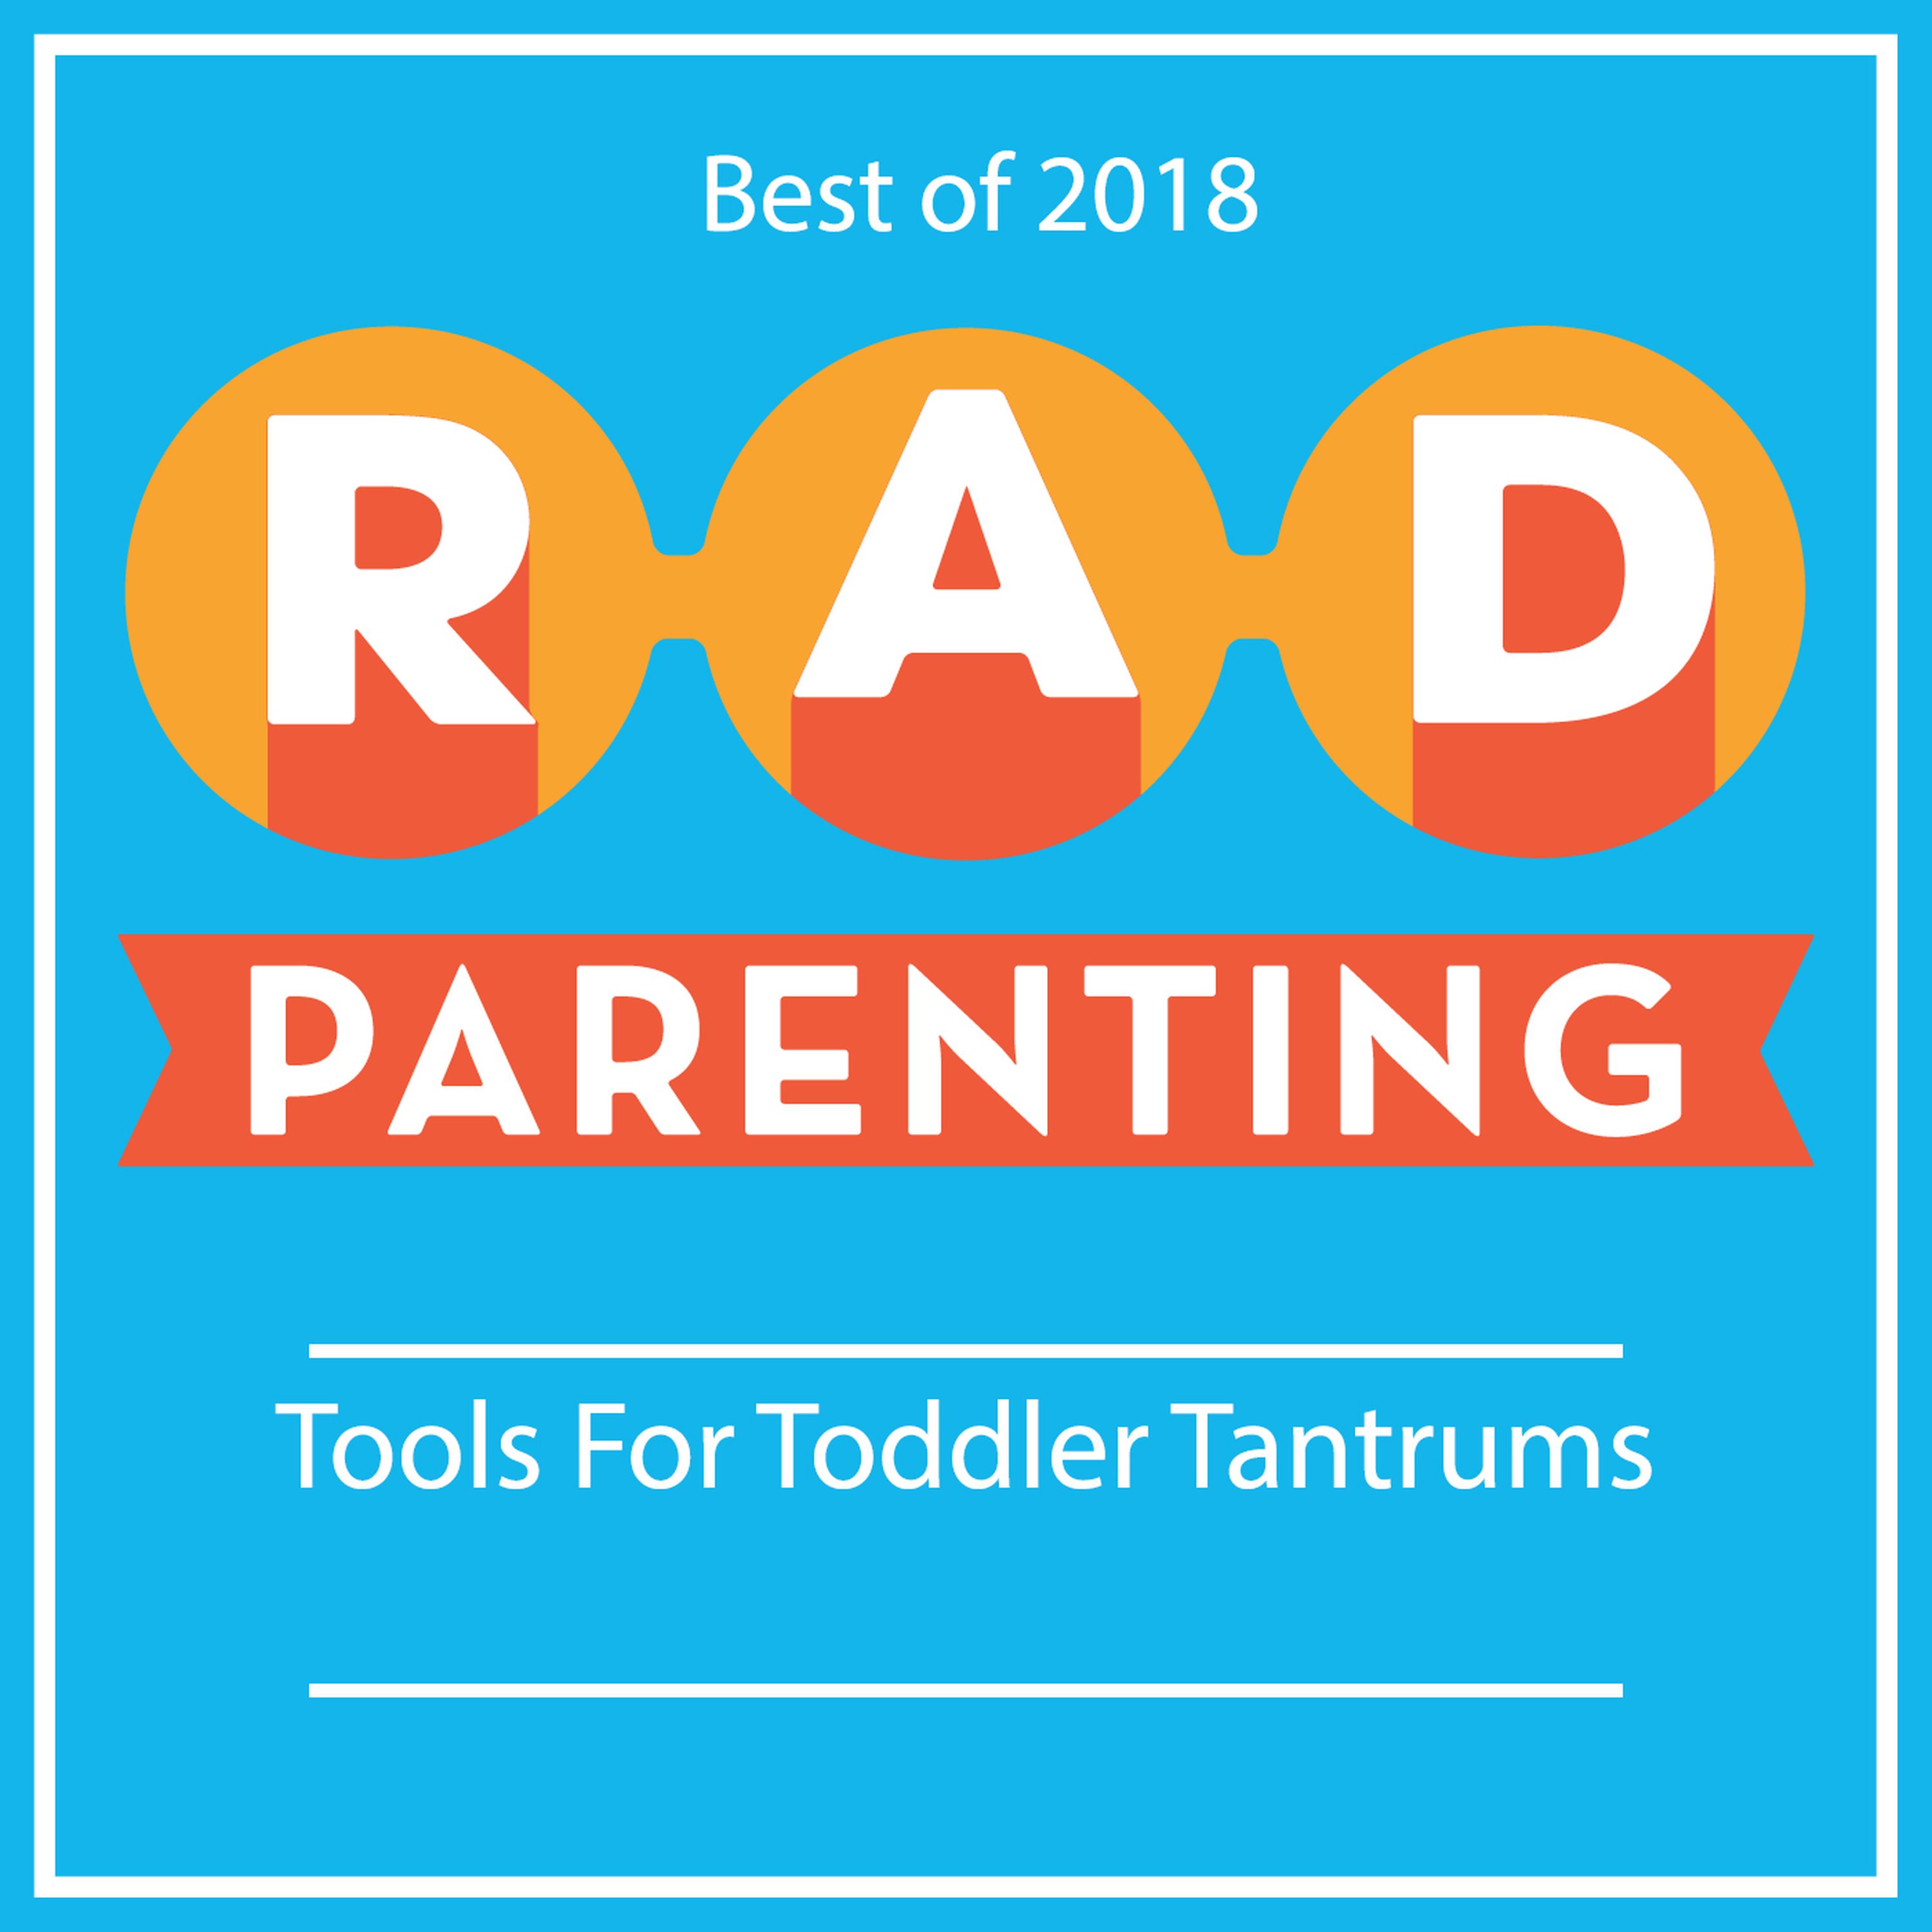 Best of Summer 2018:Tools For Toddler Tantrums